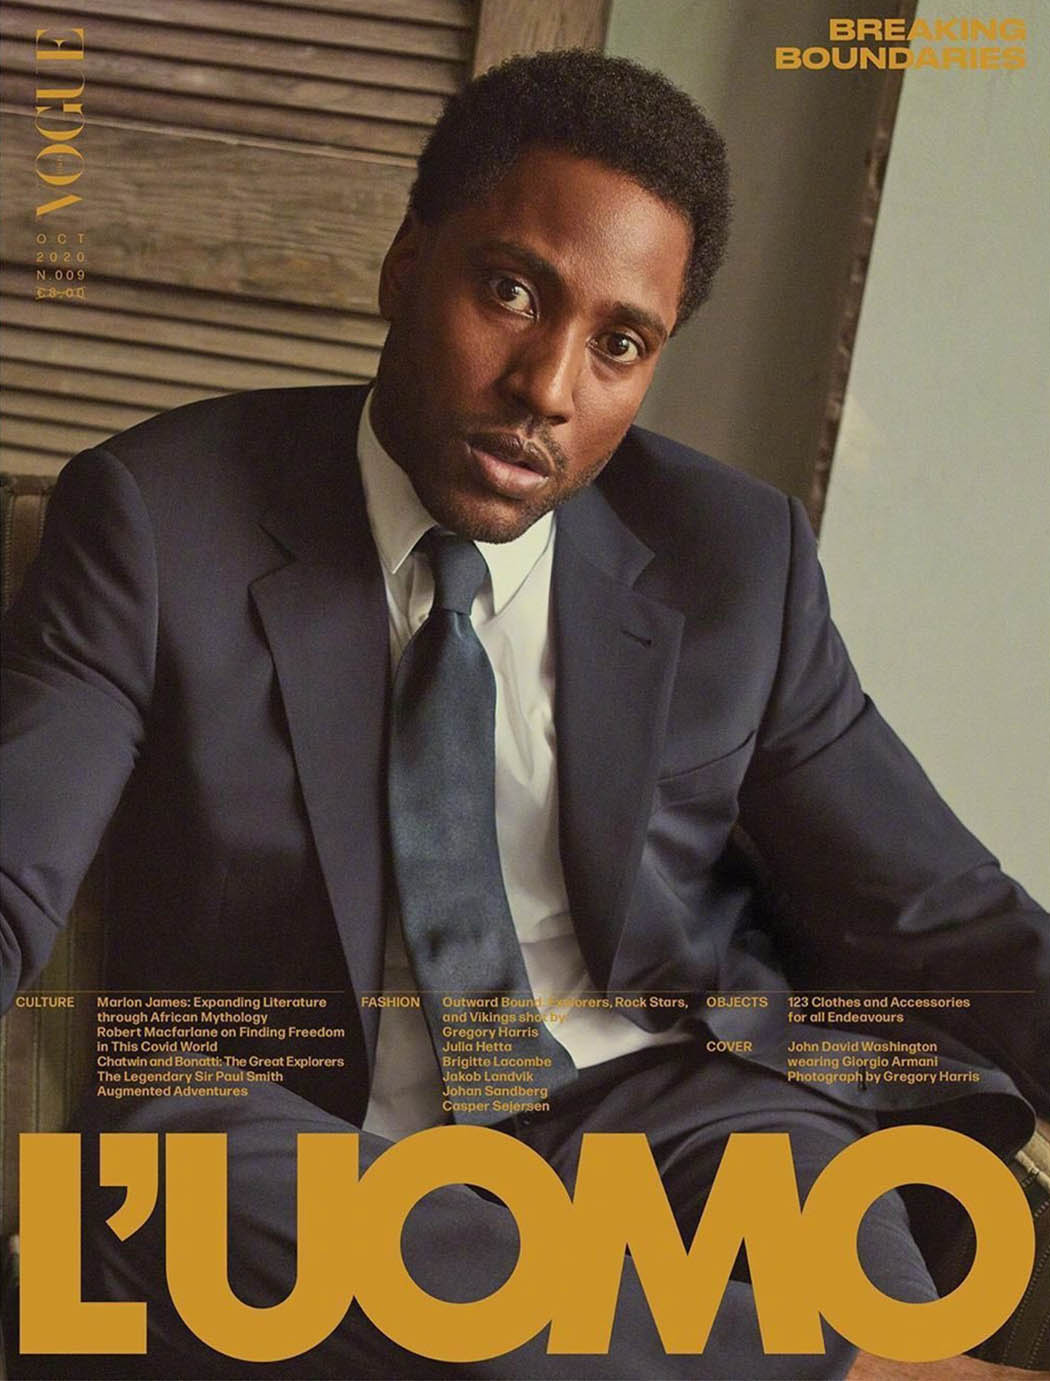 John David Washington covers L’Uomo Vogue October 2020 by Gregory Harris